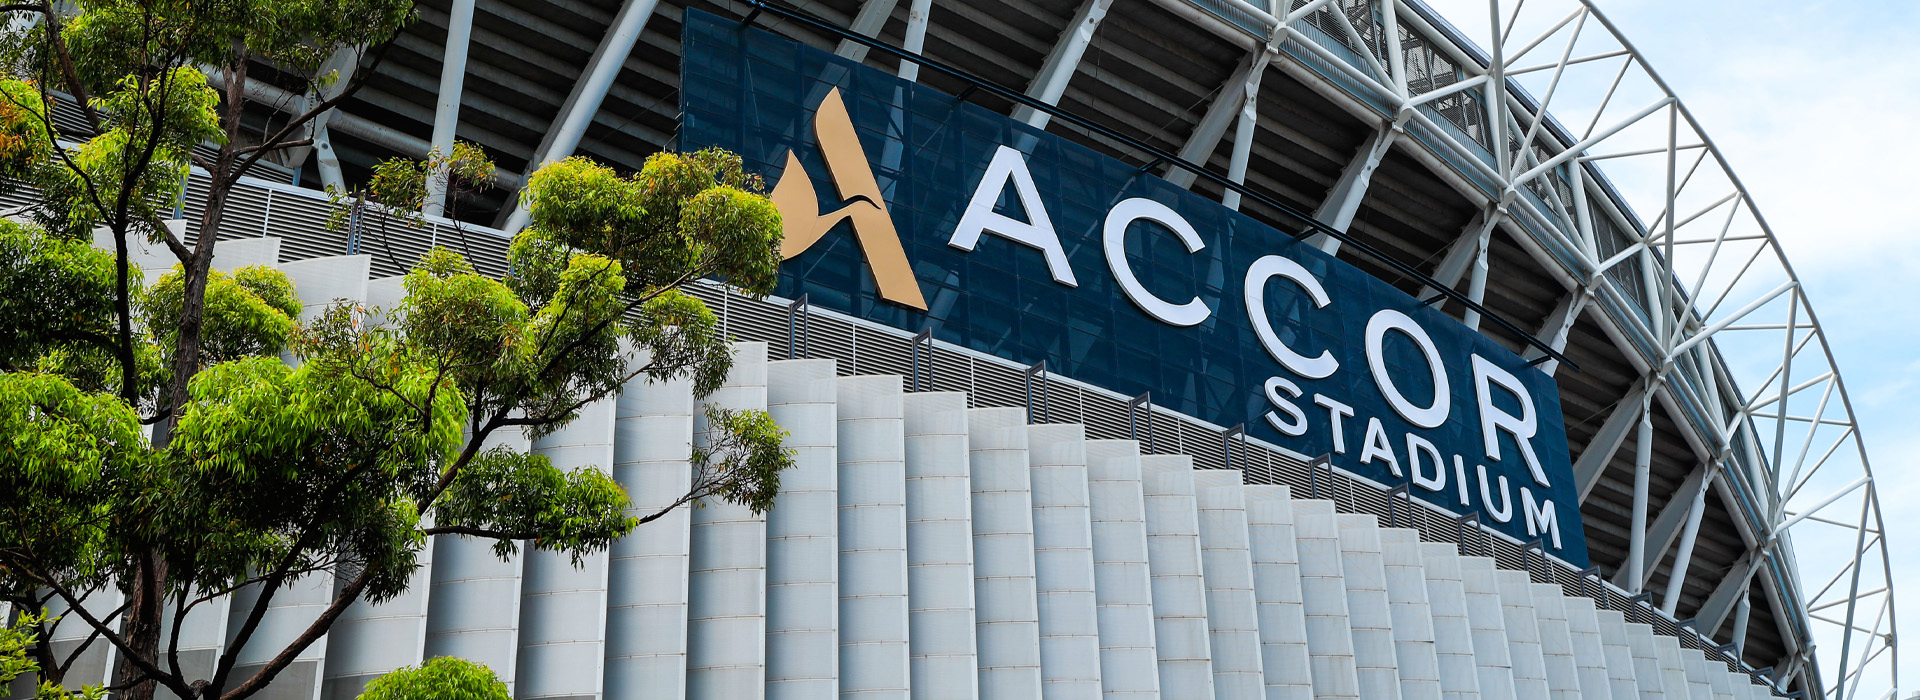 Accor Stadium